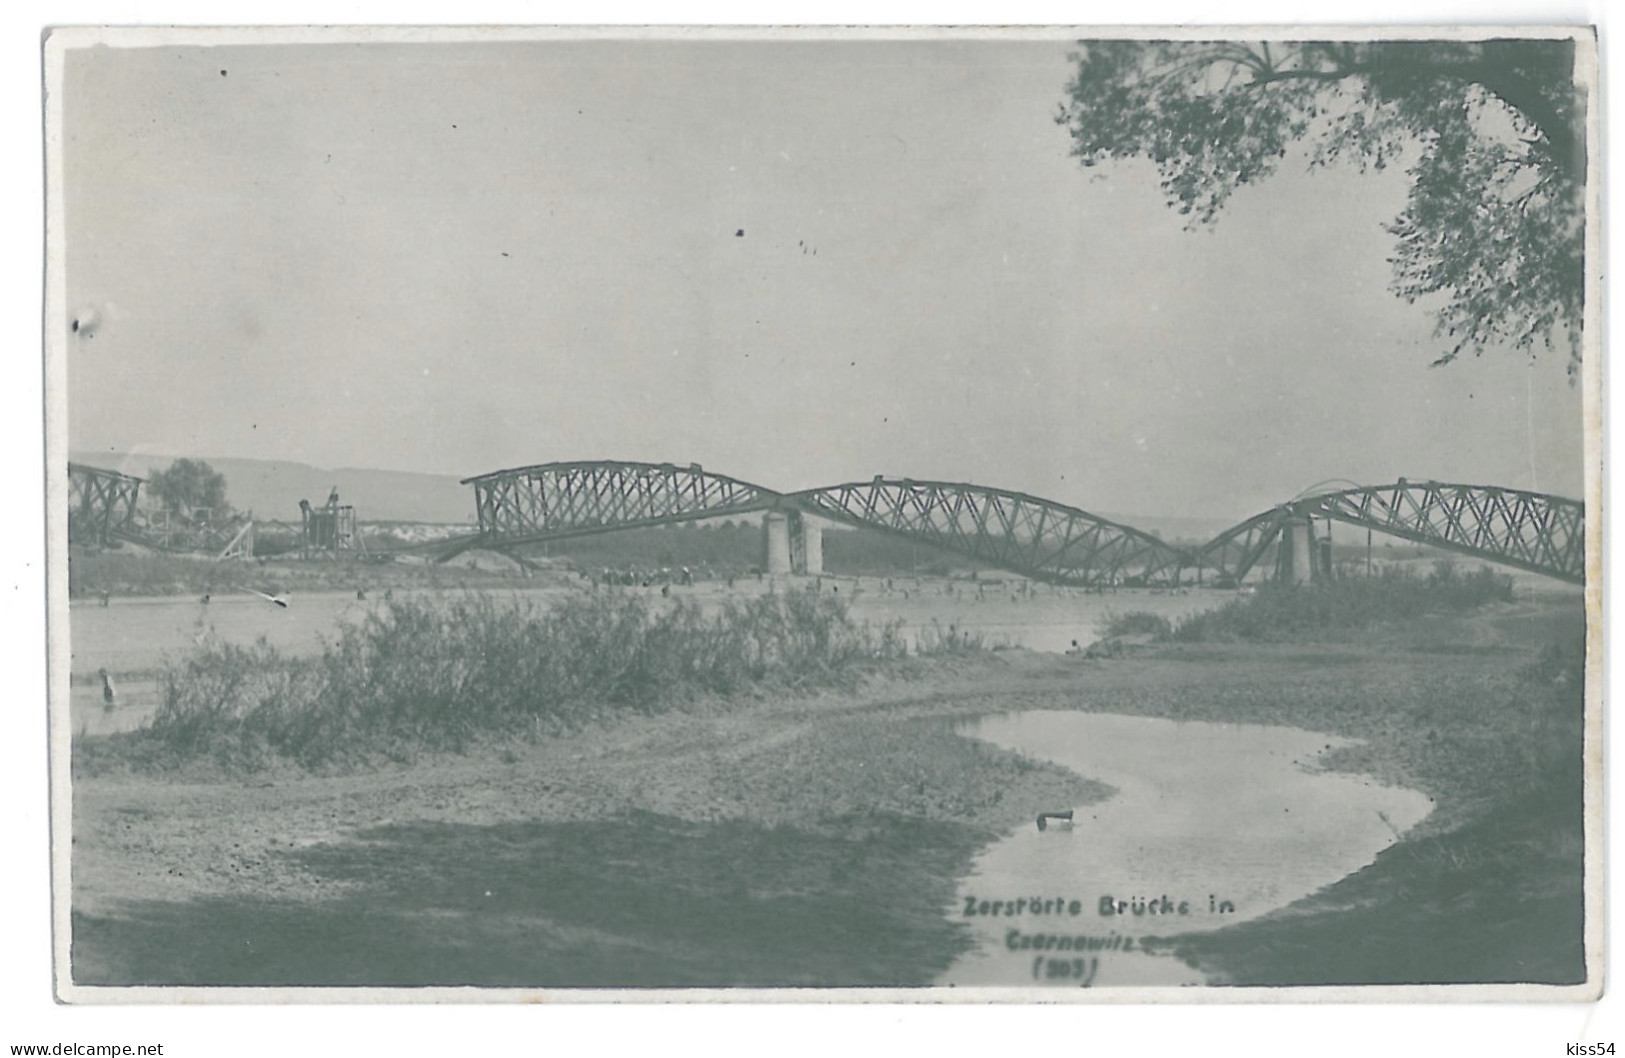 UK 60 - 15328 CZERNOWICZ, Bridge Destroyded, Ukraine - Old Postcard, Real PHOTO - Unused - Ukraine